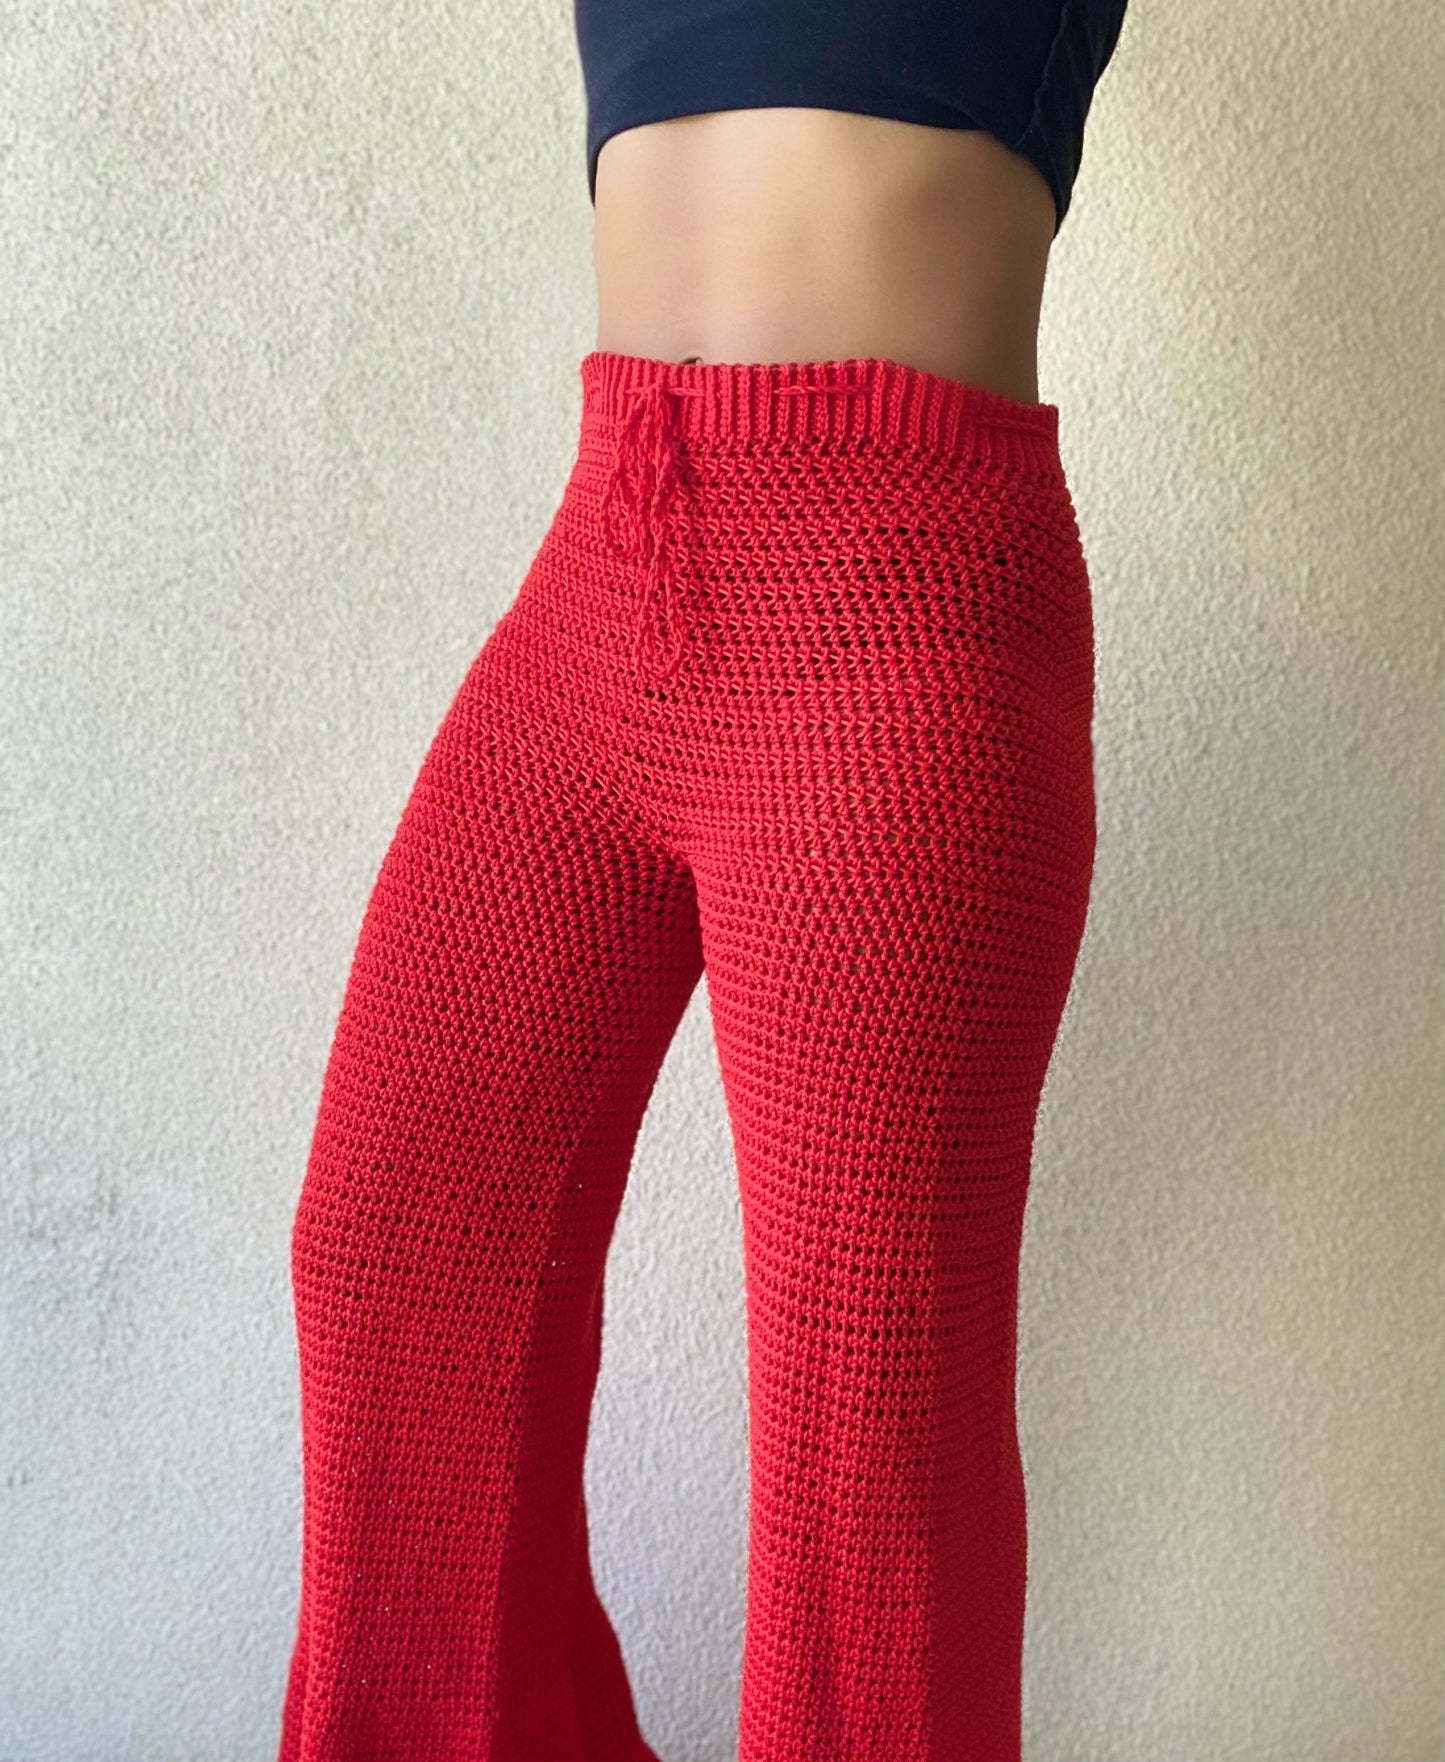 Basic Crochet Pants Pattern